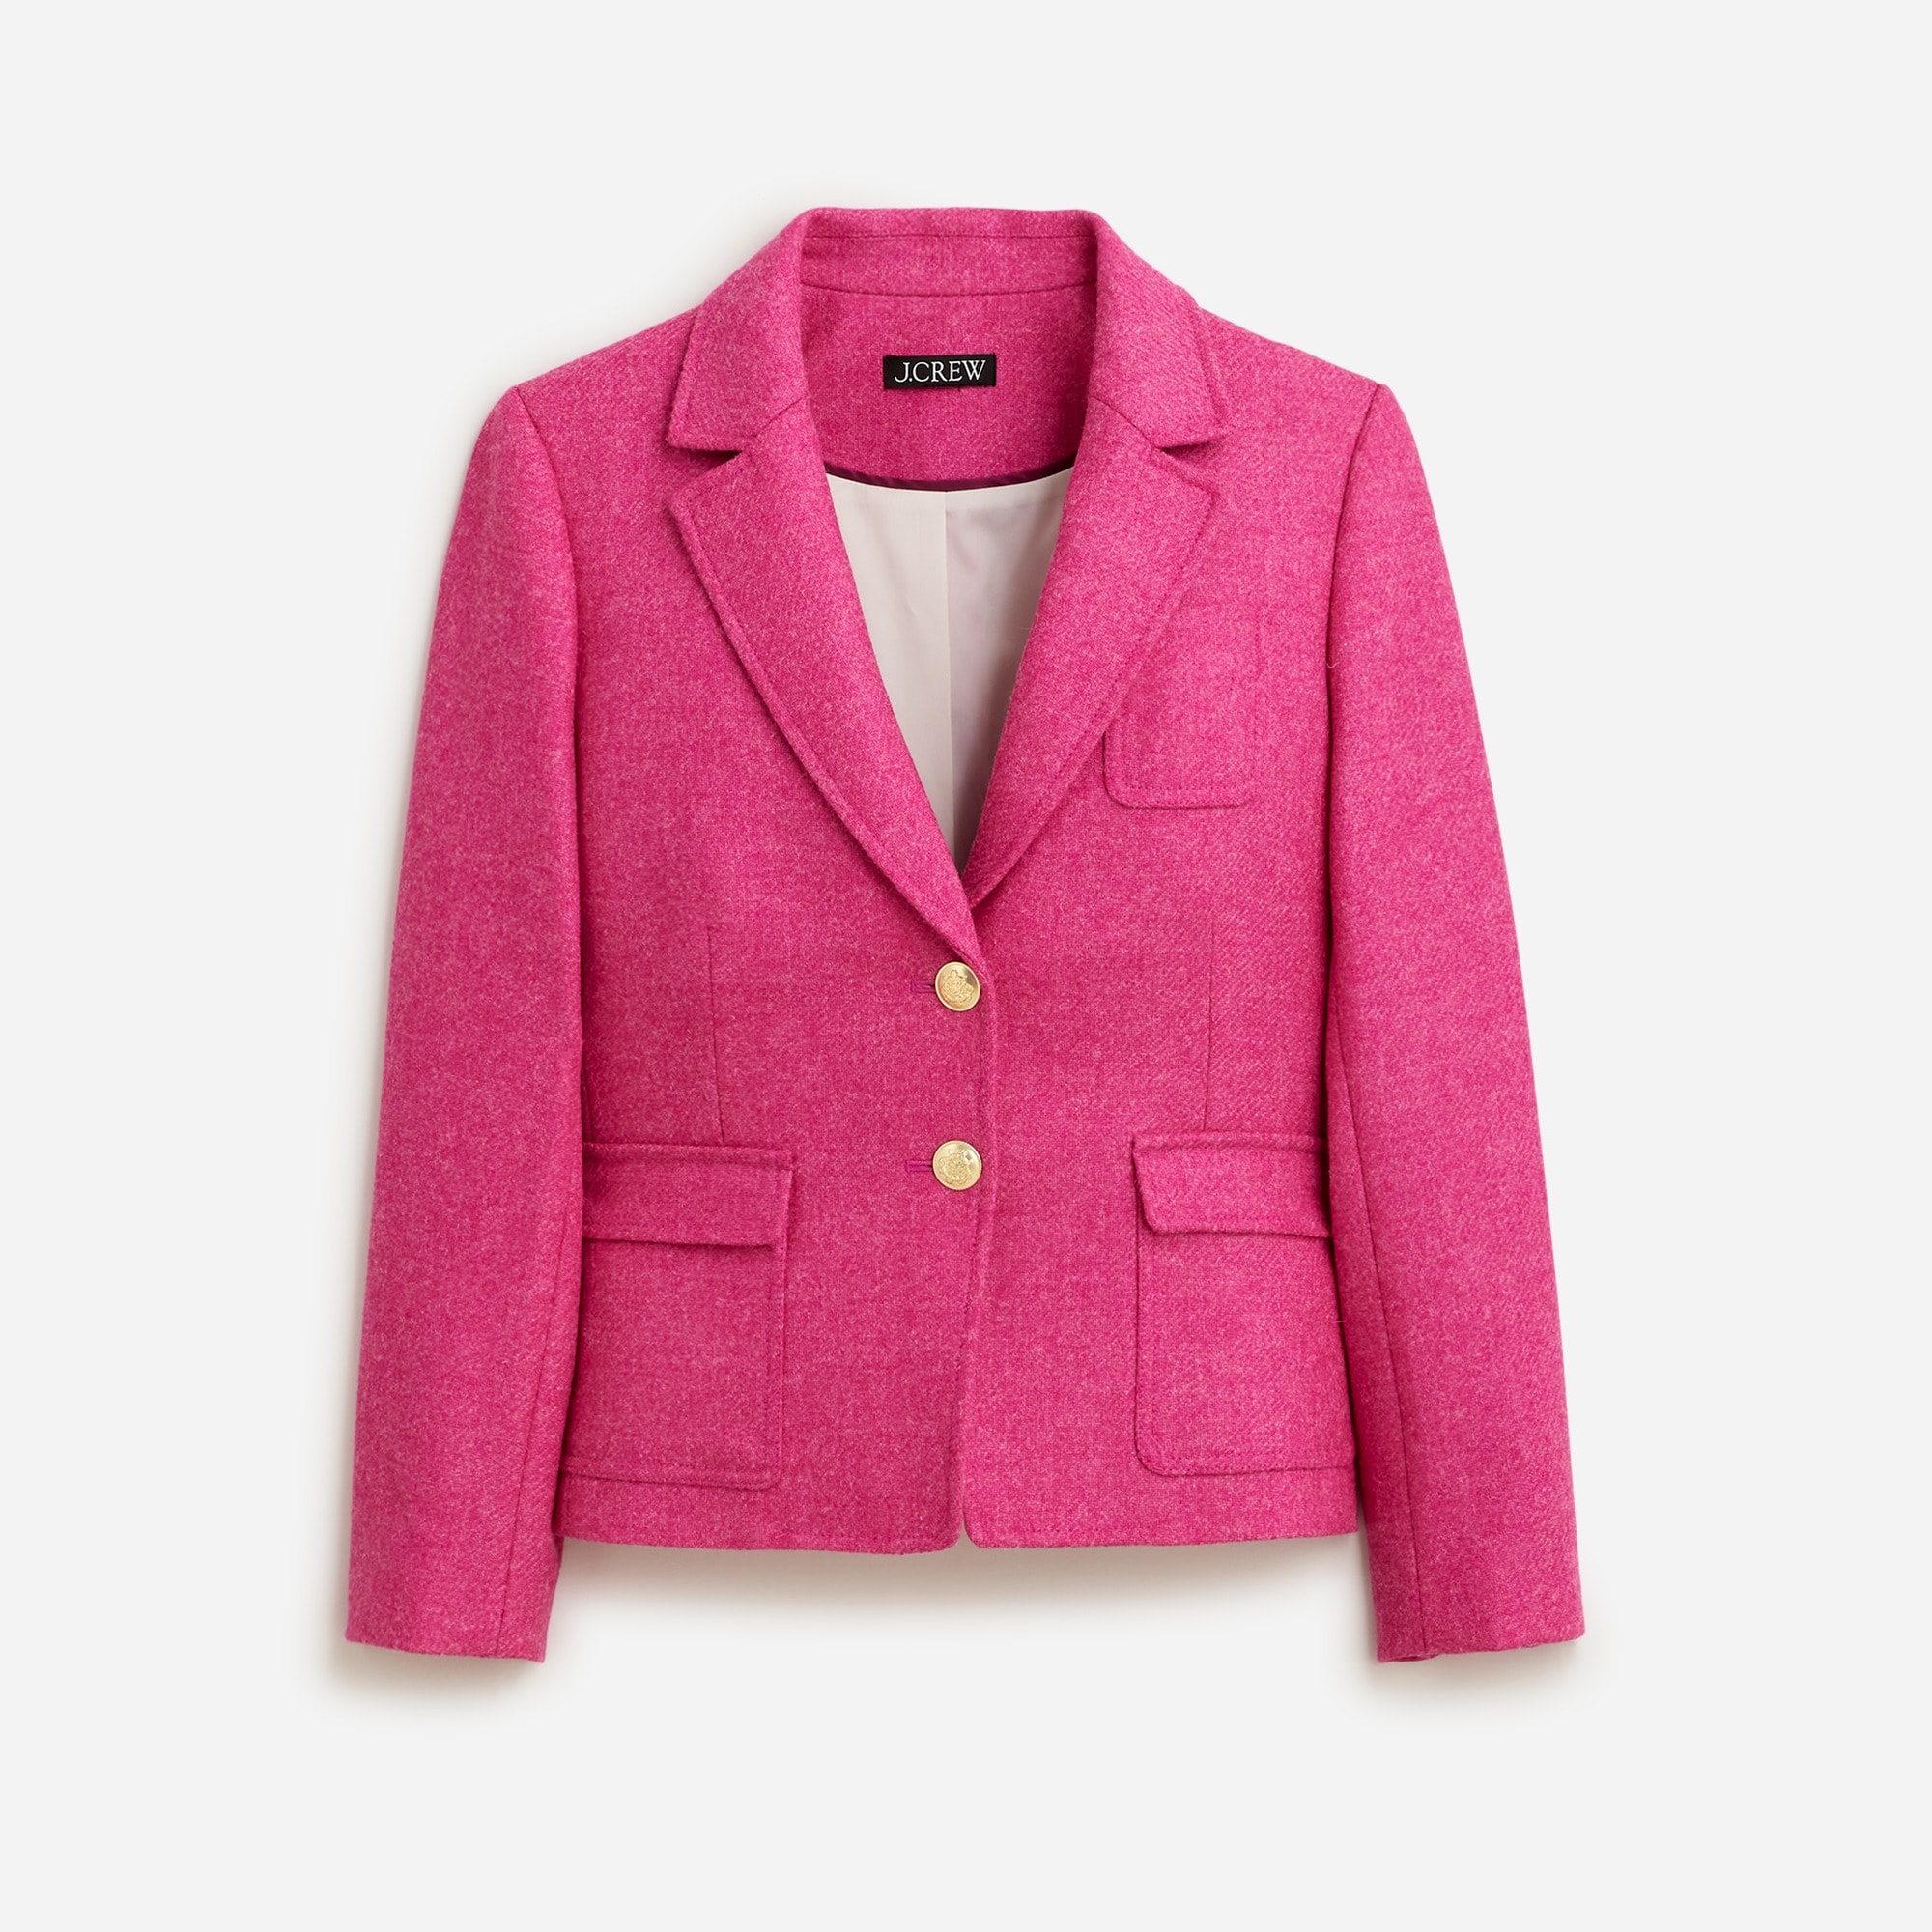 J.Crew Women's Shrunken-fit Blazer in Pink English Wool (Size 24)